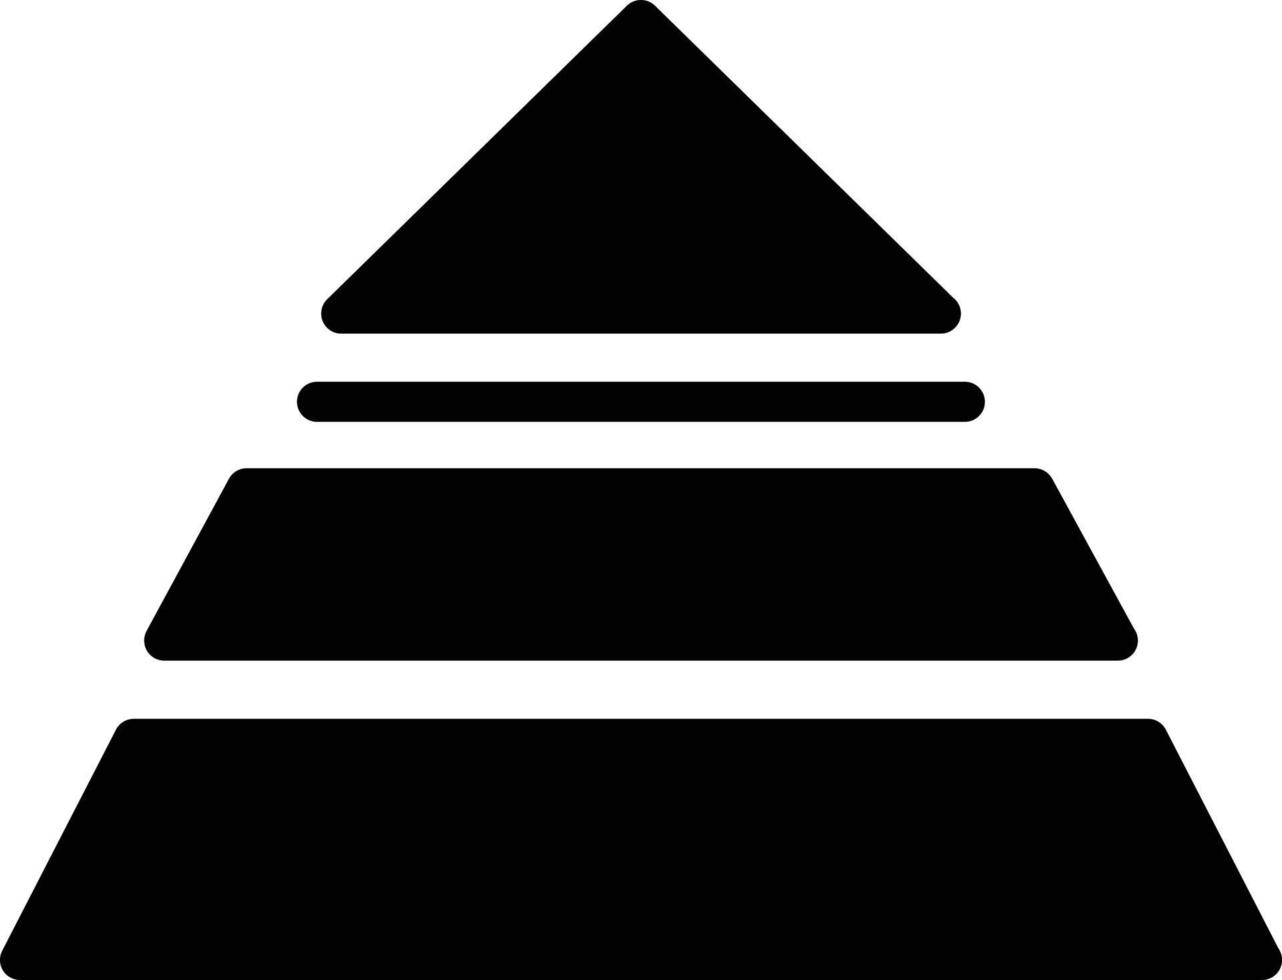 icône de glyphe de pyramide vecteur